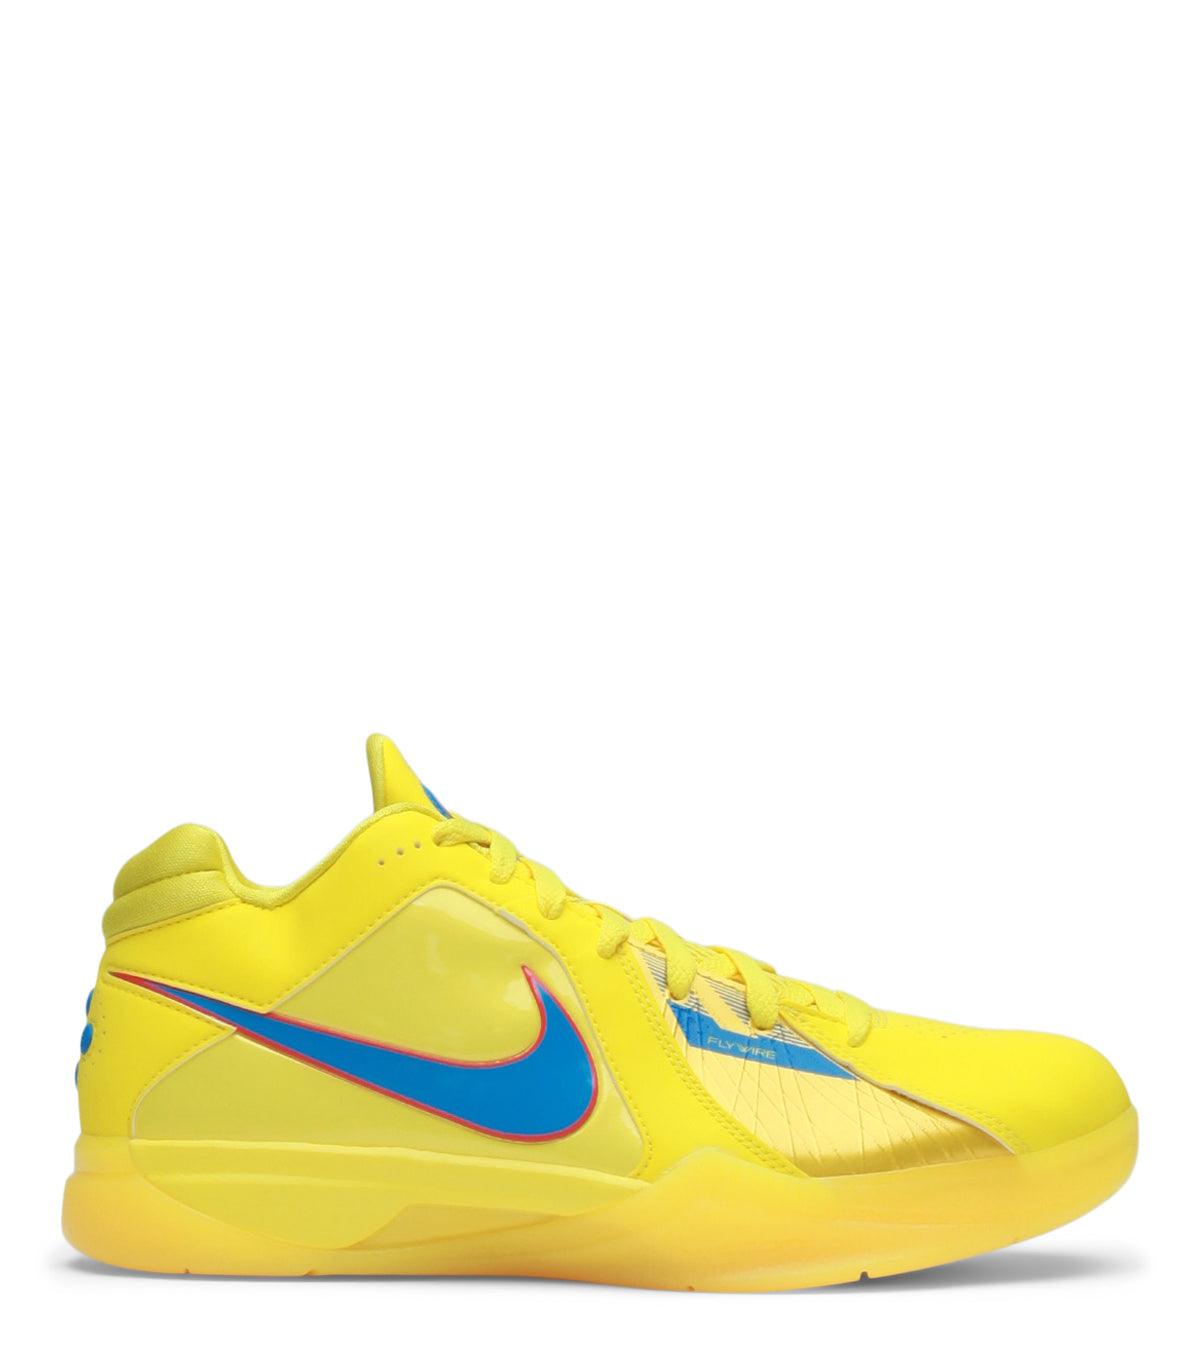 12.19.23 Nike Zoom KD 3 Yellow